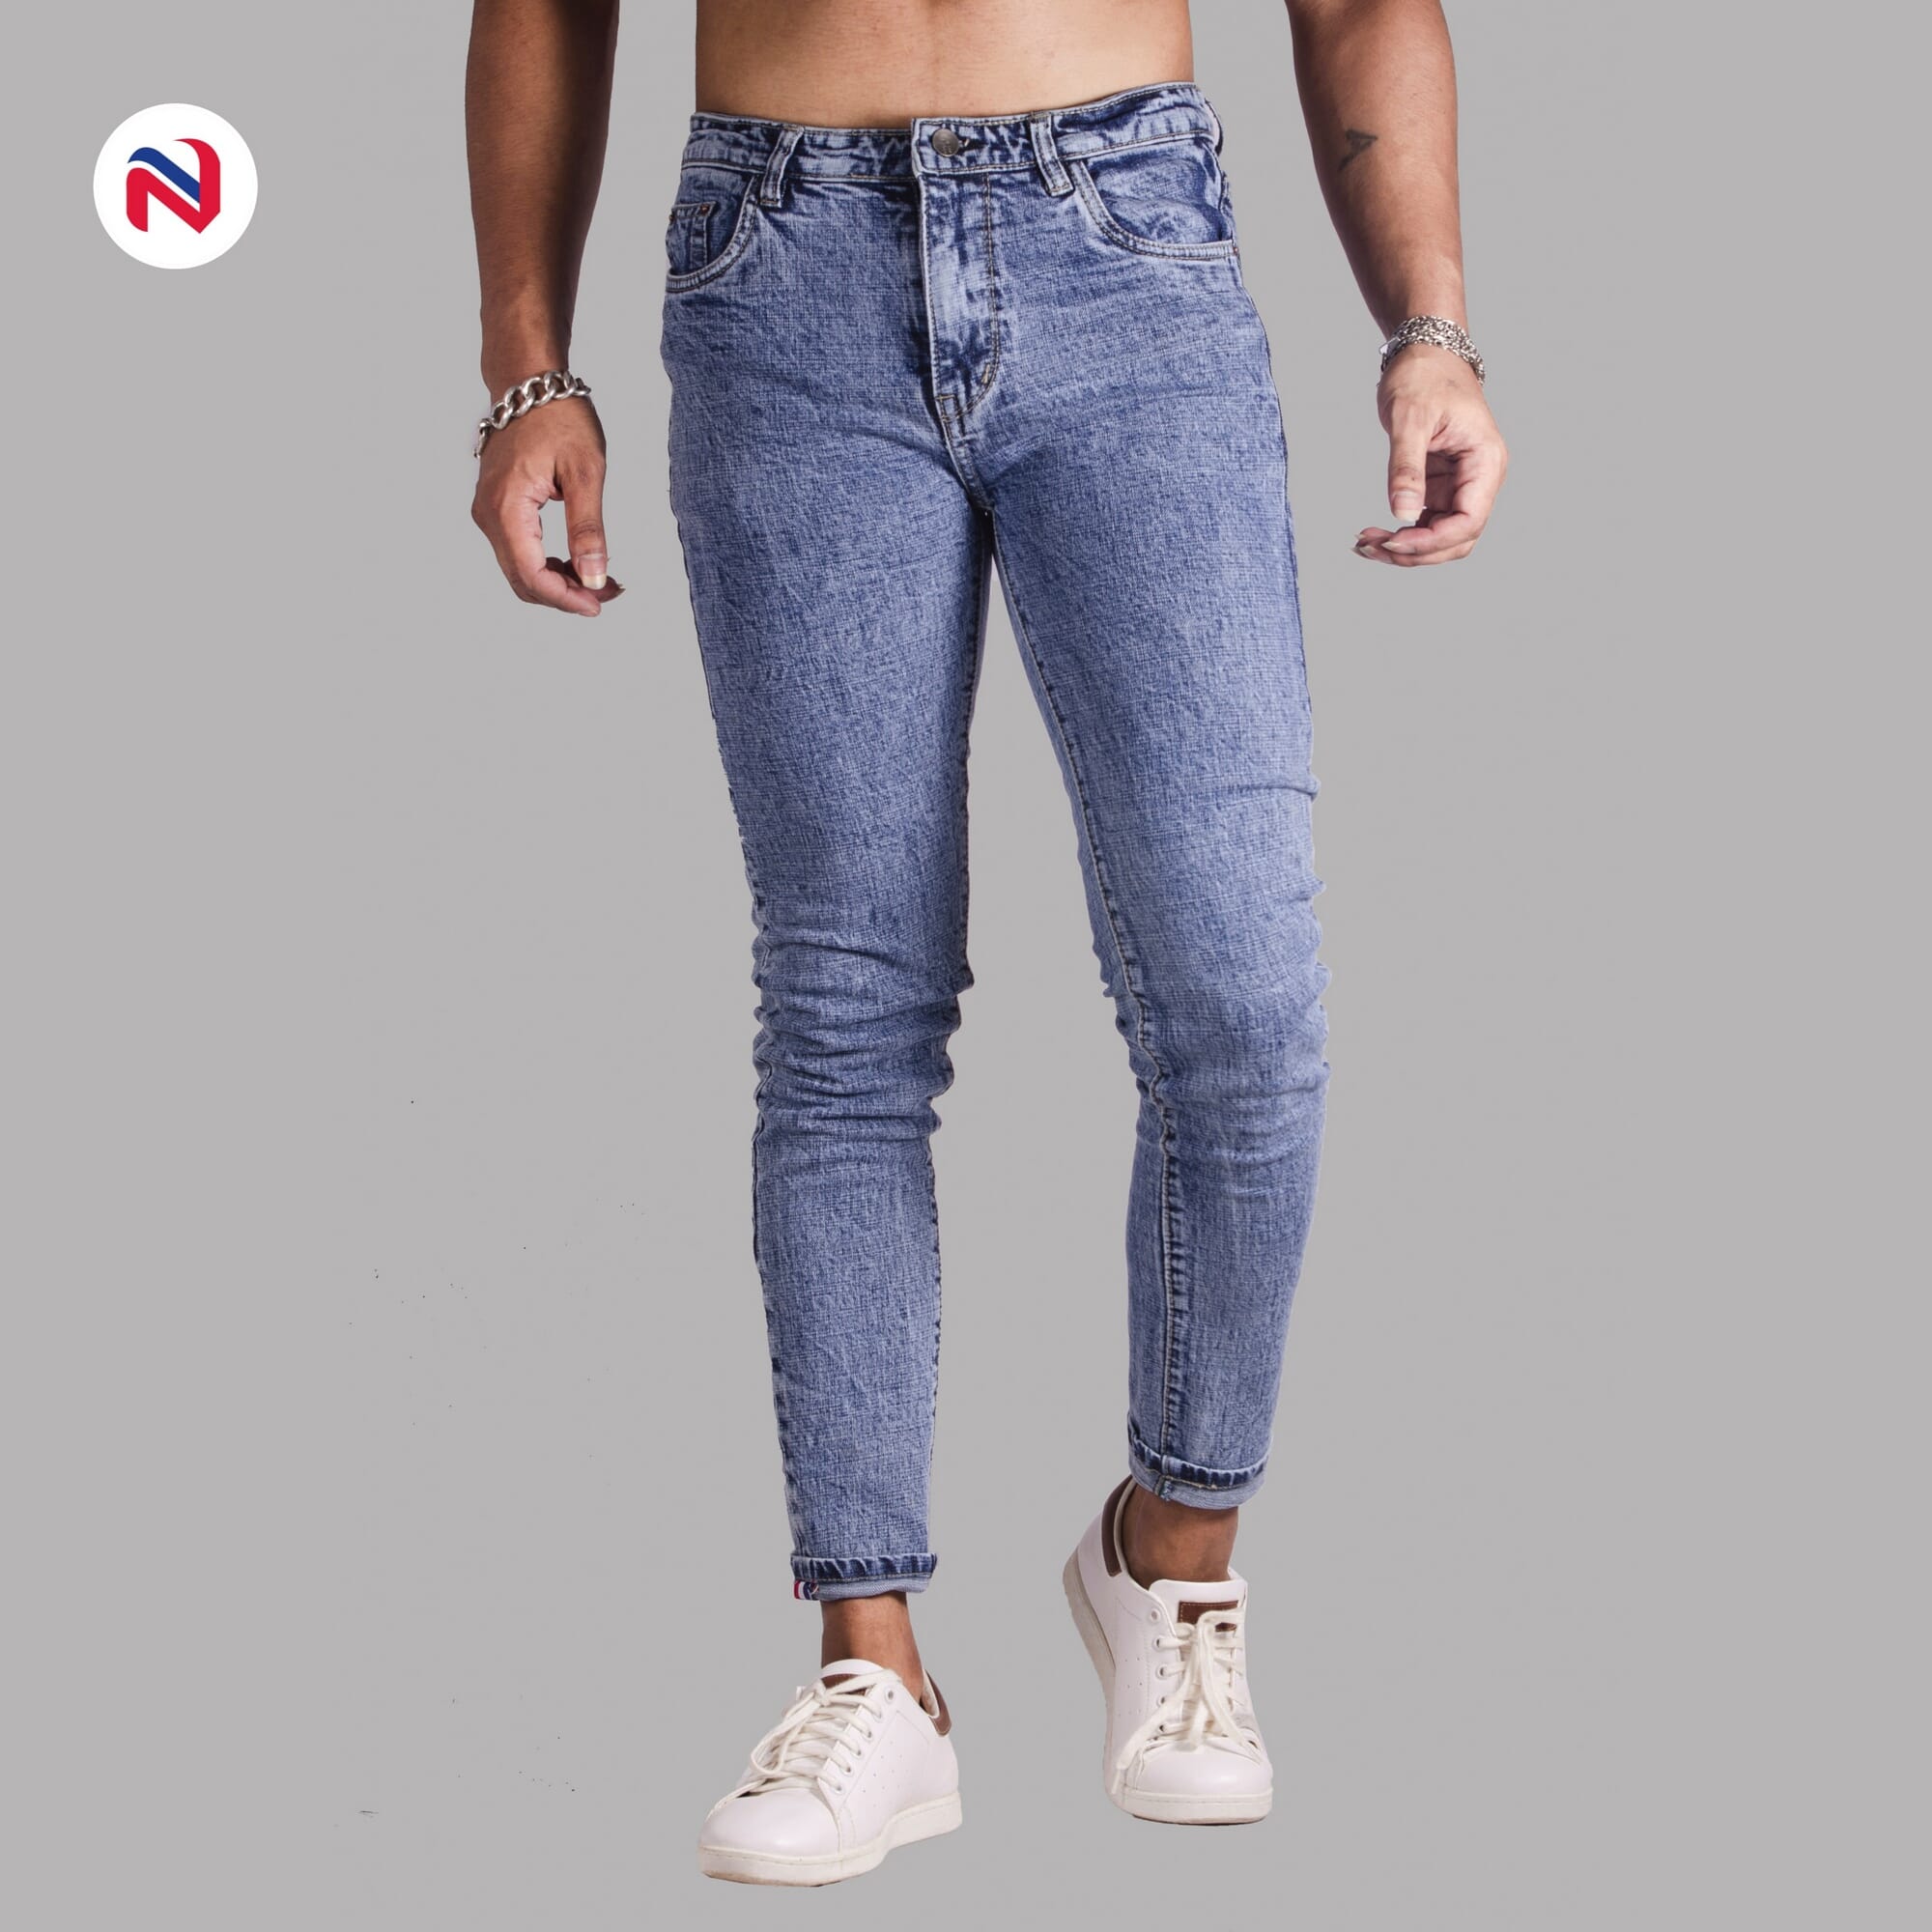 VIRJEANS ( VJC800 ) Regular Fit Denim Jeans Pant For Men